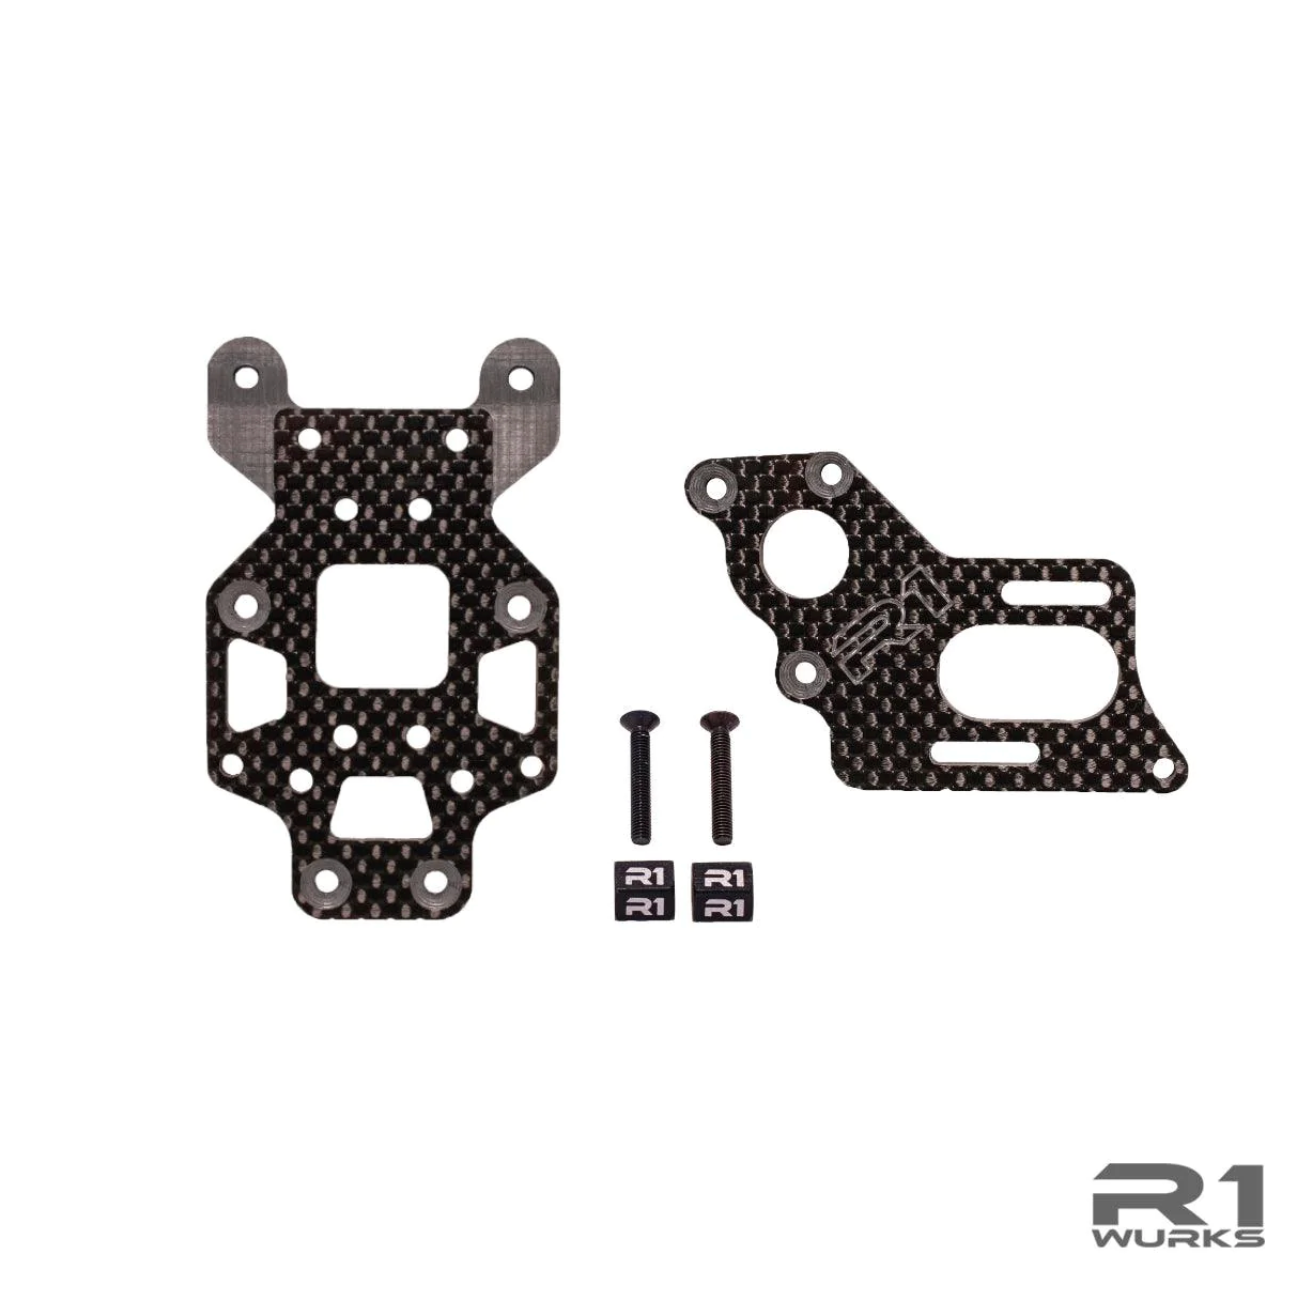 R1 Wurks DC1 Carbon Fiber Motor Mount Lowering Kit (Laydown Transmission)